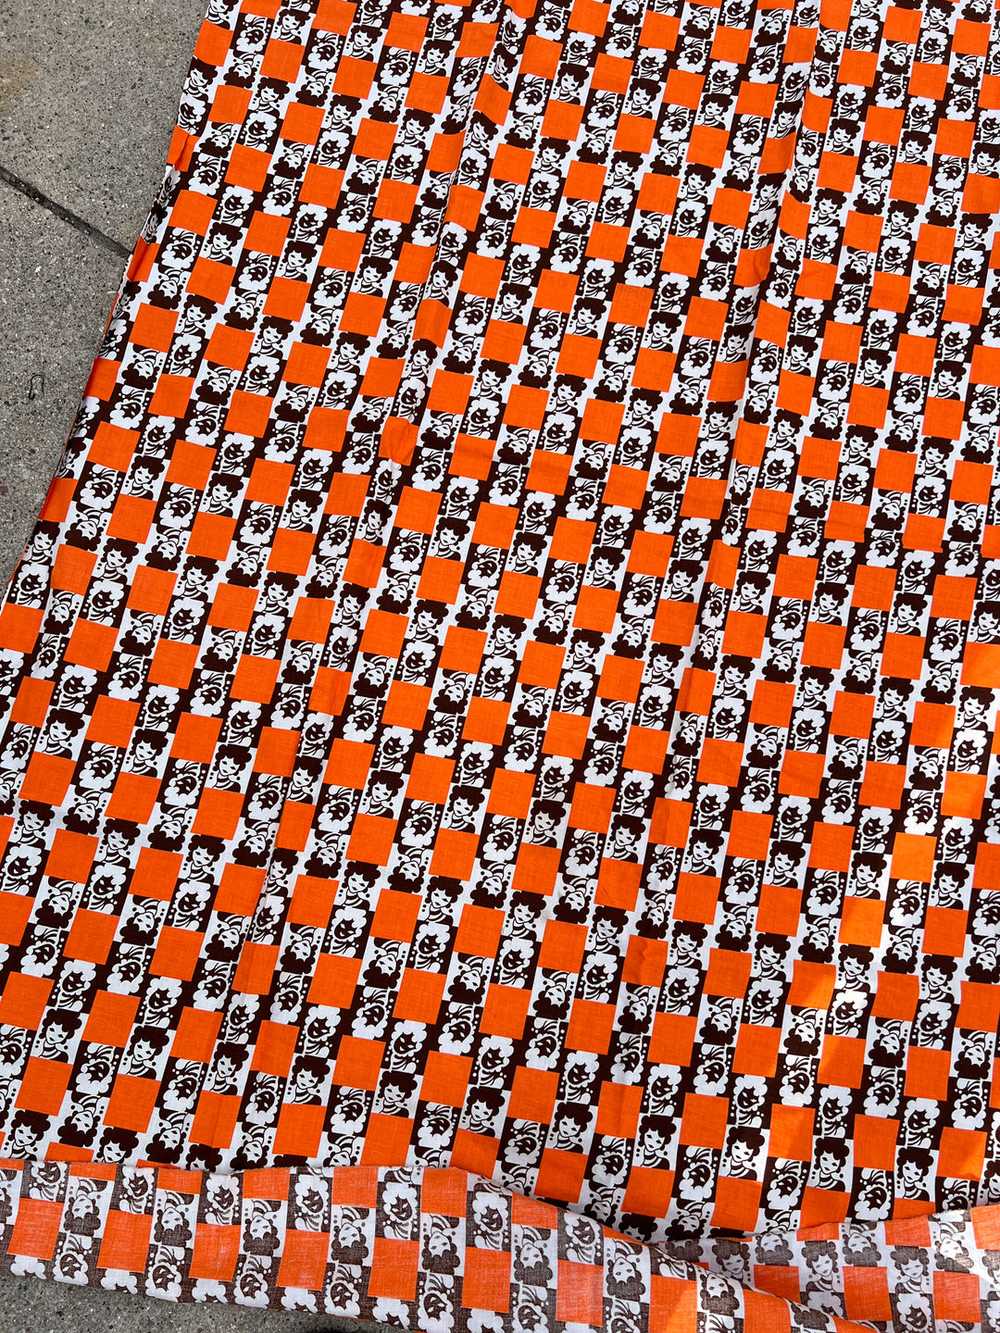 Vintage Orange Faces Novelty Print Fabric - image 3